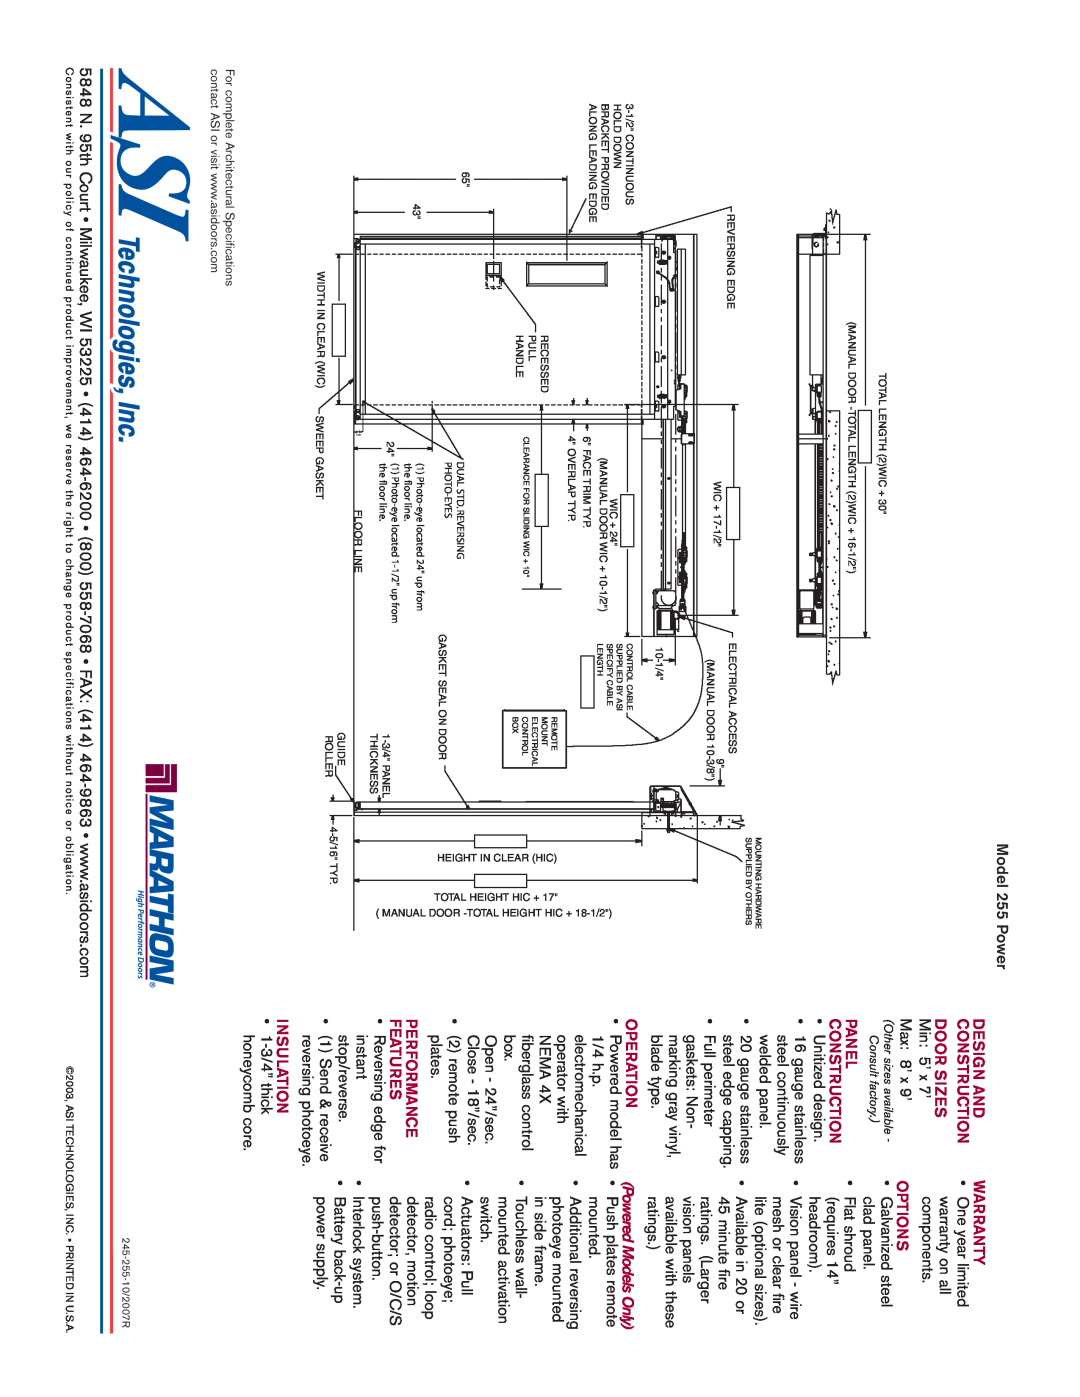 Marathon 255, 245 manual DOOR SIZES Min 5’ x 7’, Warranty, Options, Operation, Performance, Features, Insulation 